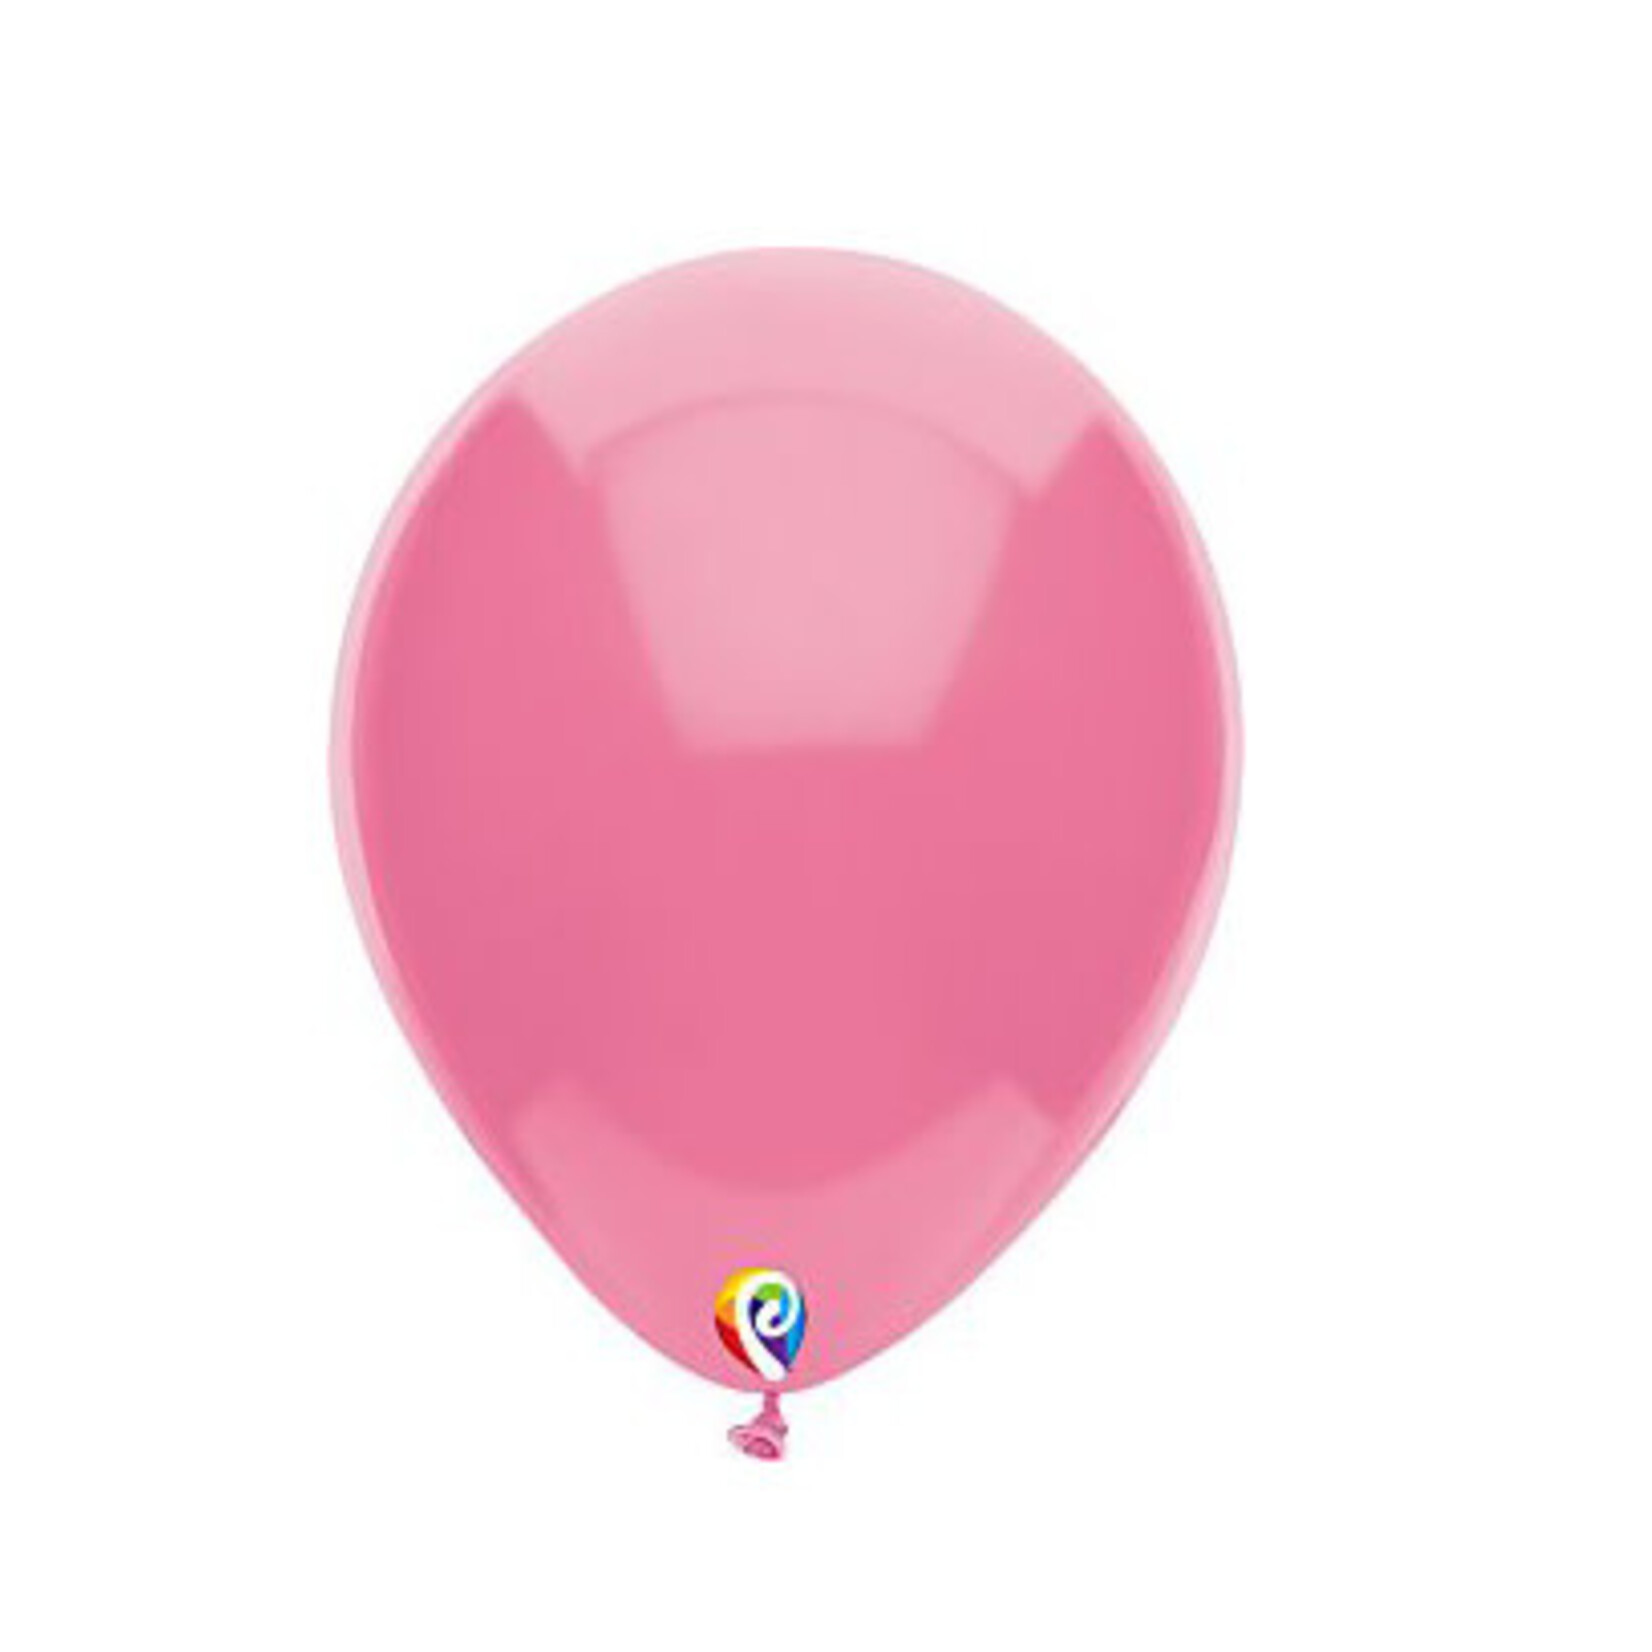 Funsational 12" Hot Pink Funsational Latex Balloons - 50ct.